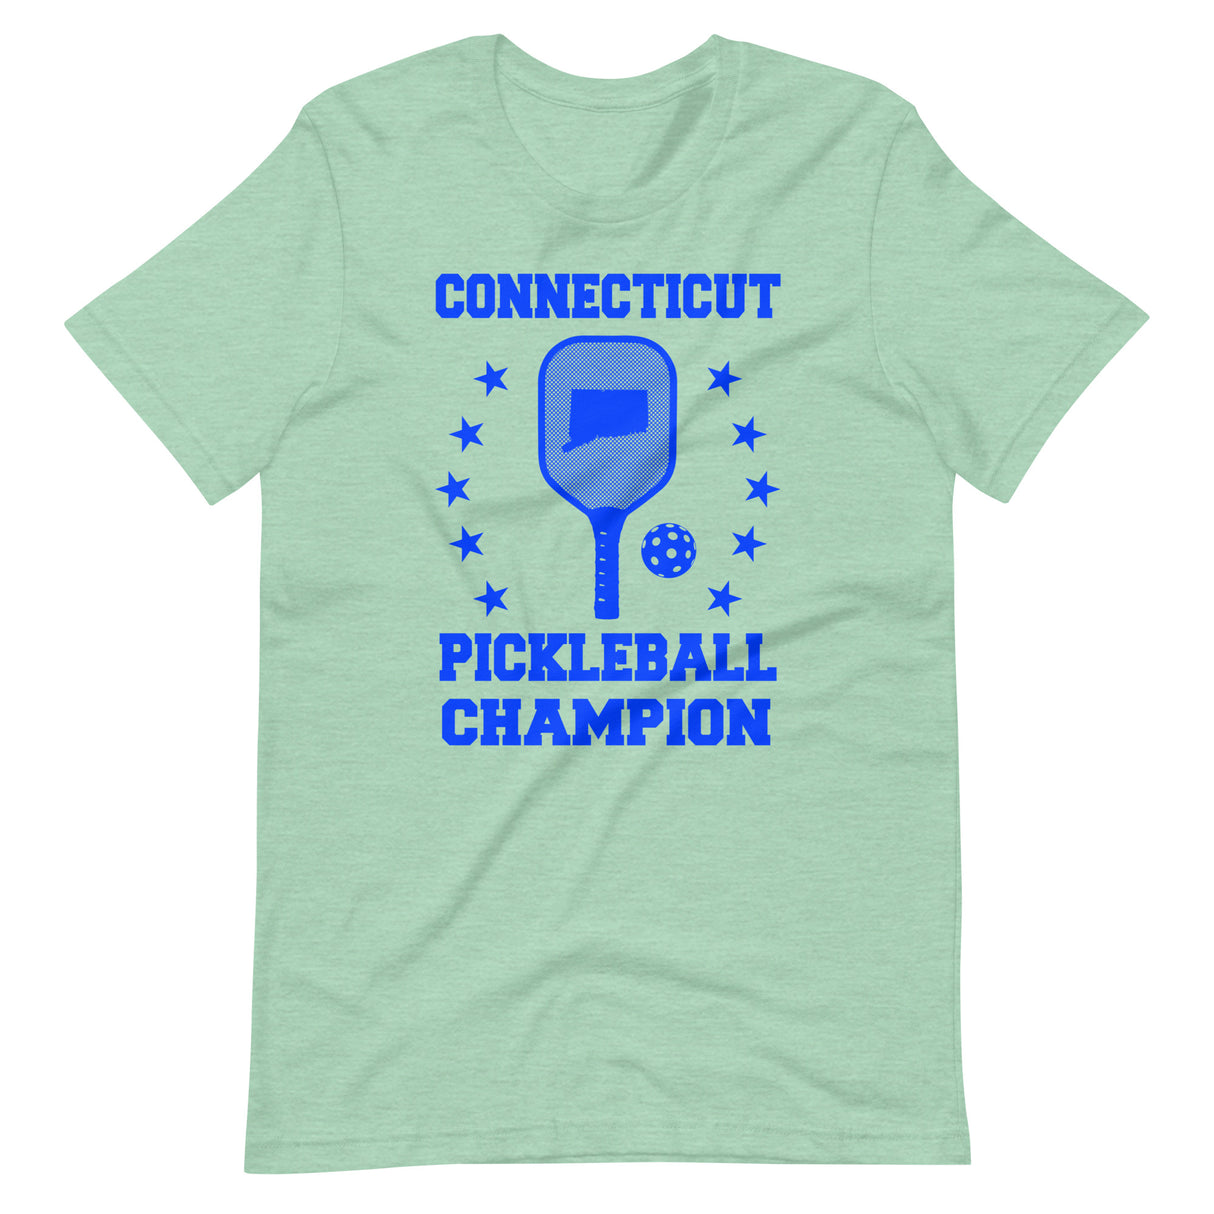 Connecticut Pickleball Champion Shirt